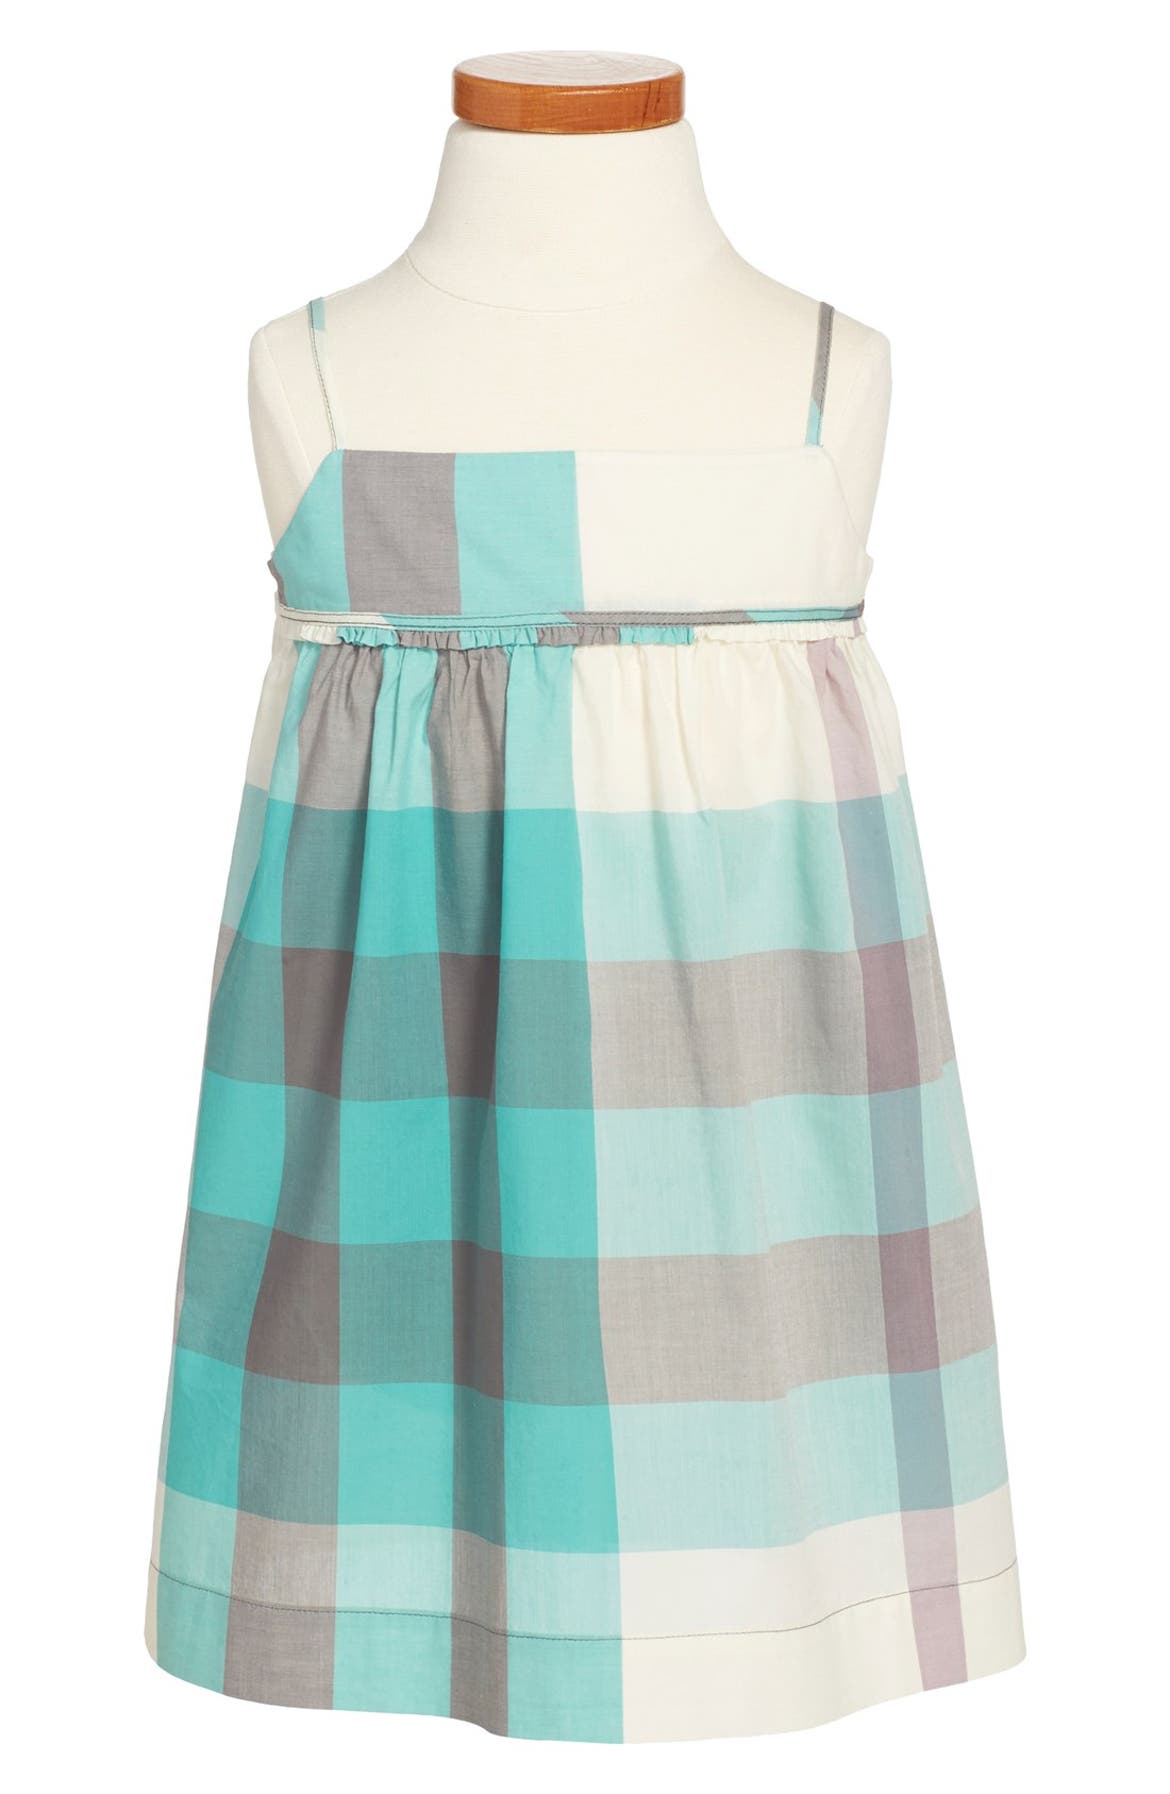 Burberry 'Magnolia' Check Print Cotton Sundress (Toddler Girls) | Nordstrom